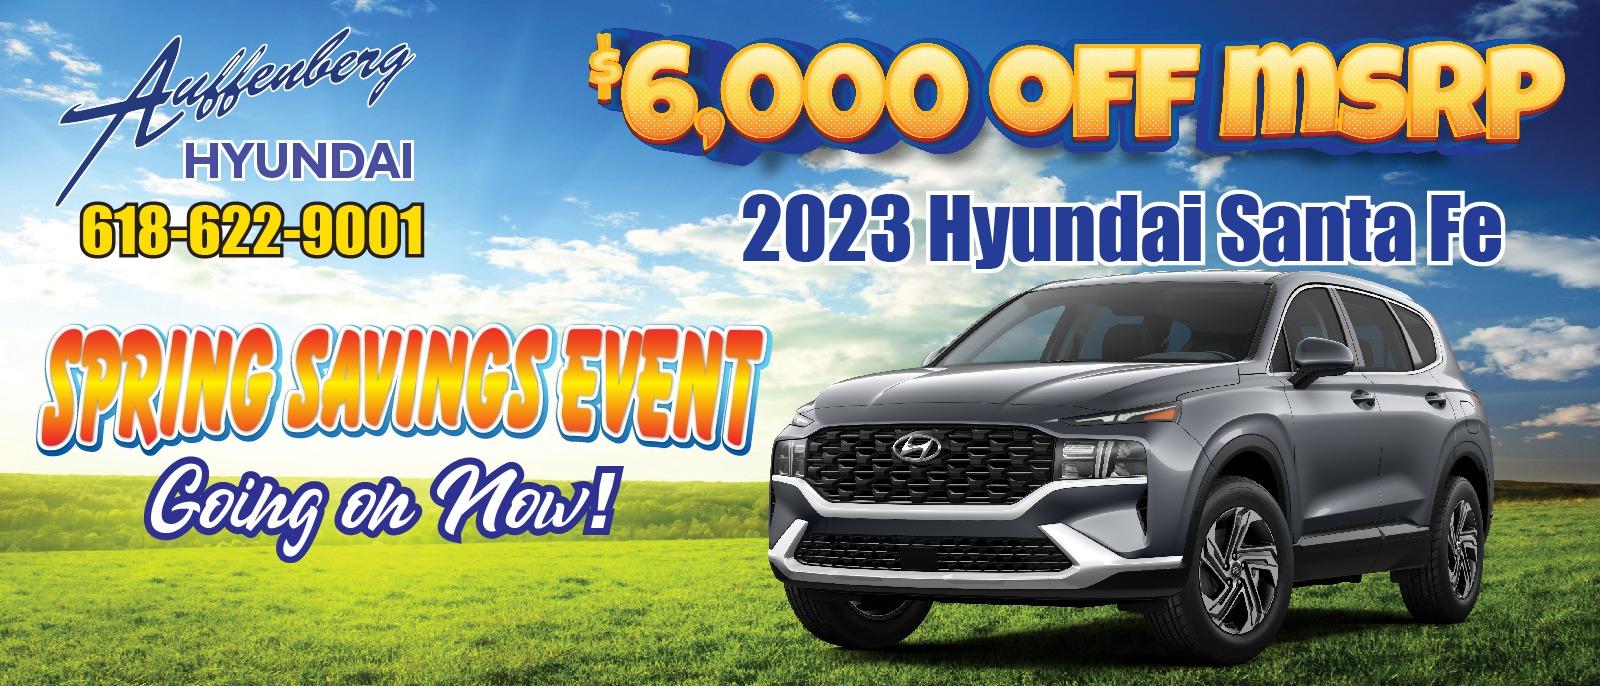 2023 Hyundai Santa Fe
$6,000 off MSRP